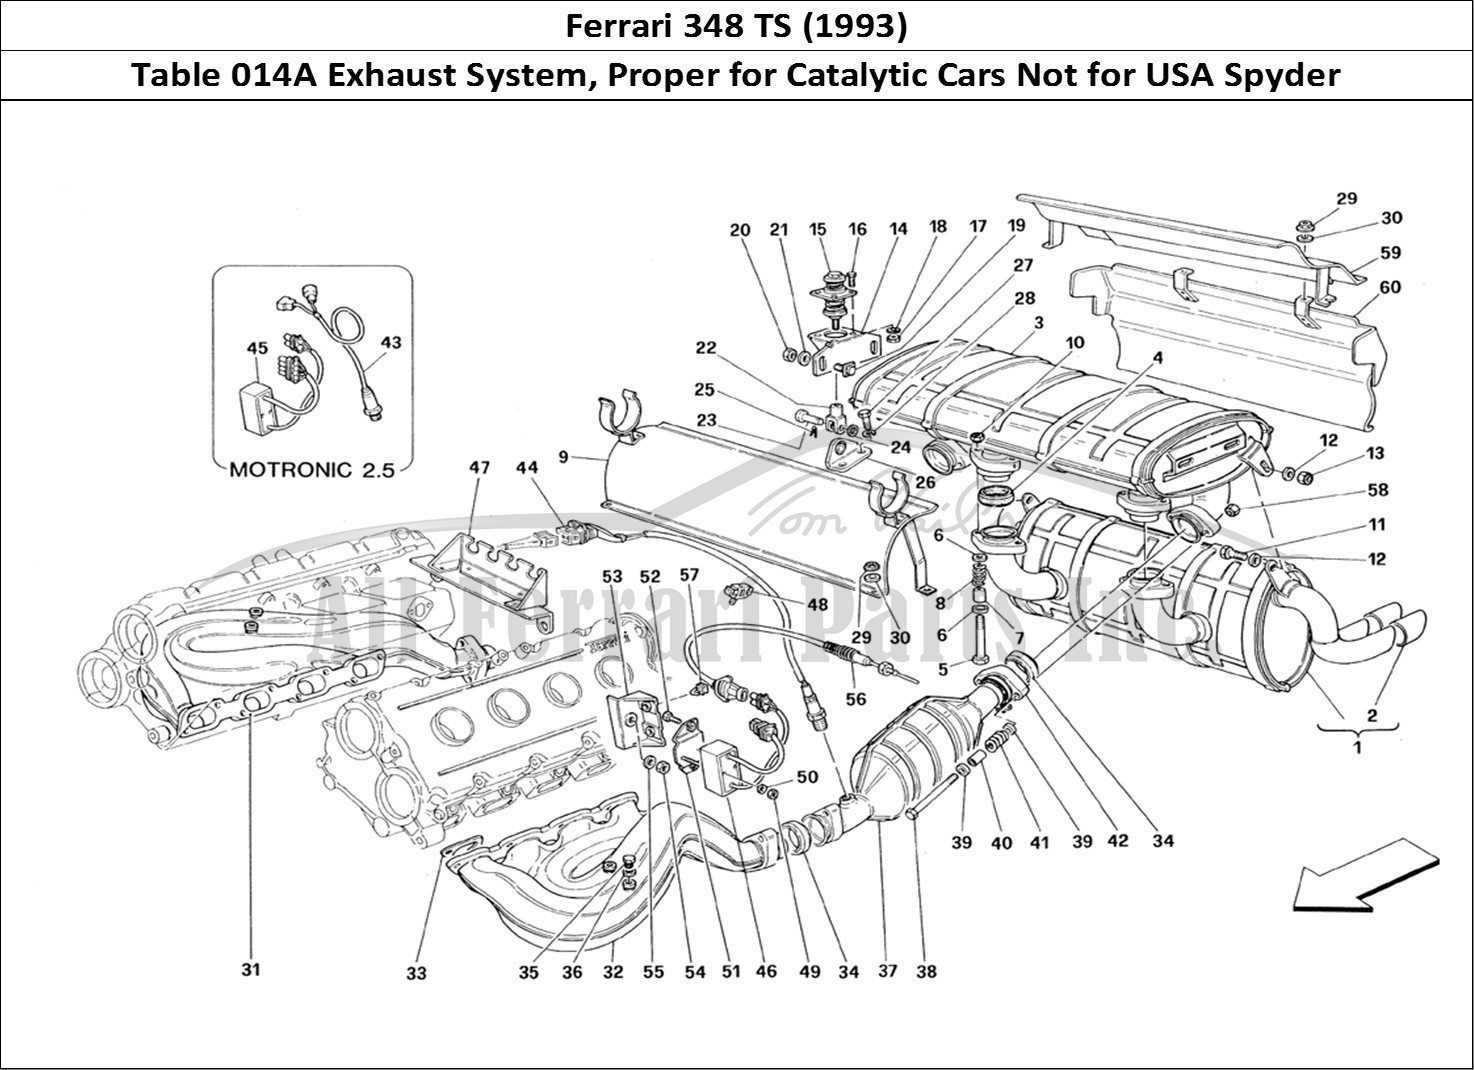 Ferrari Parts Ferrari 348 TB (1993) Page 014 Exhaust System - Valid fo